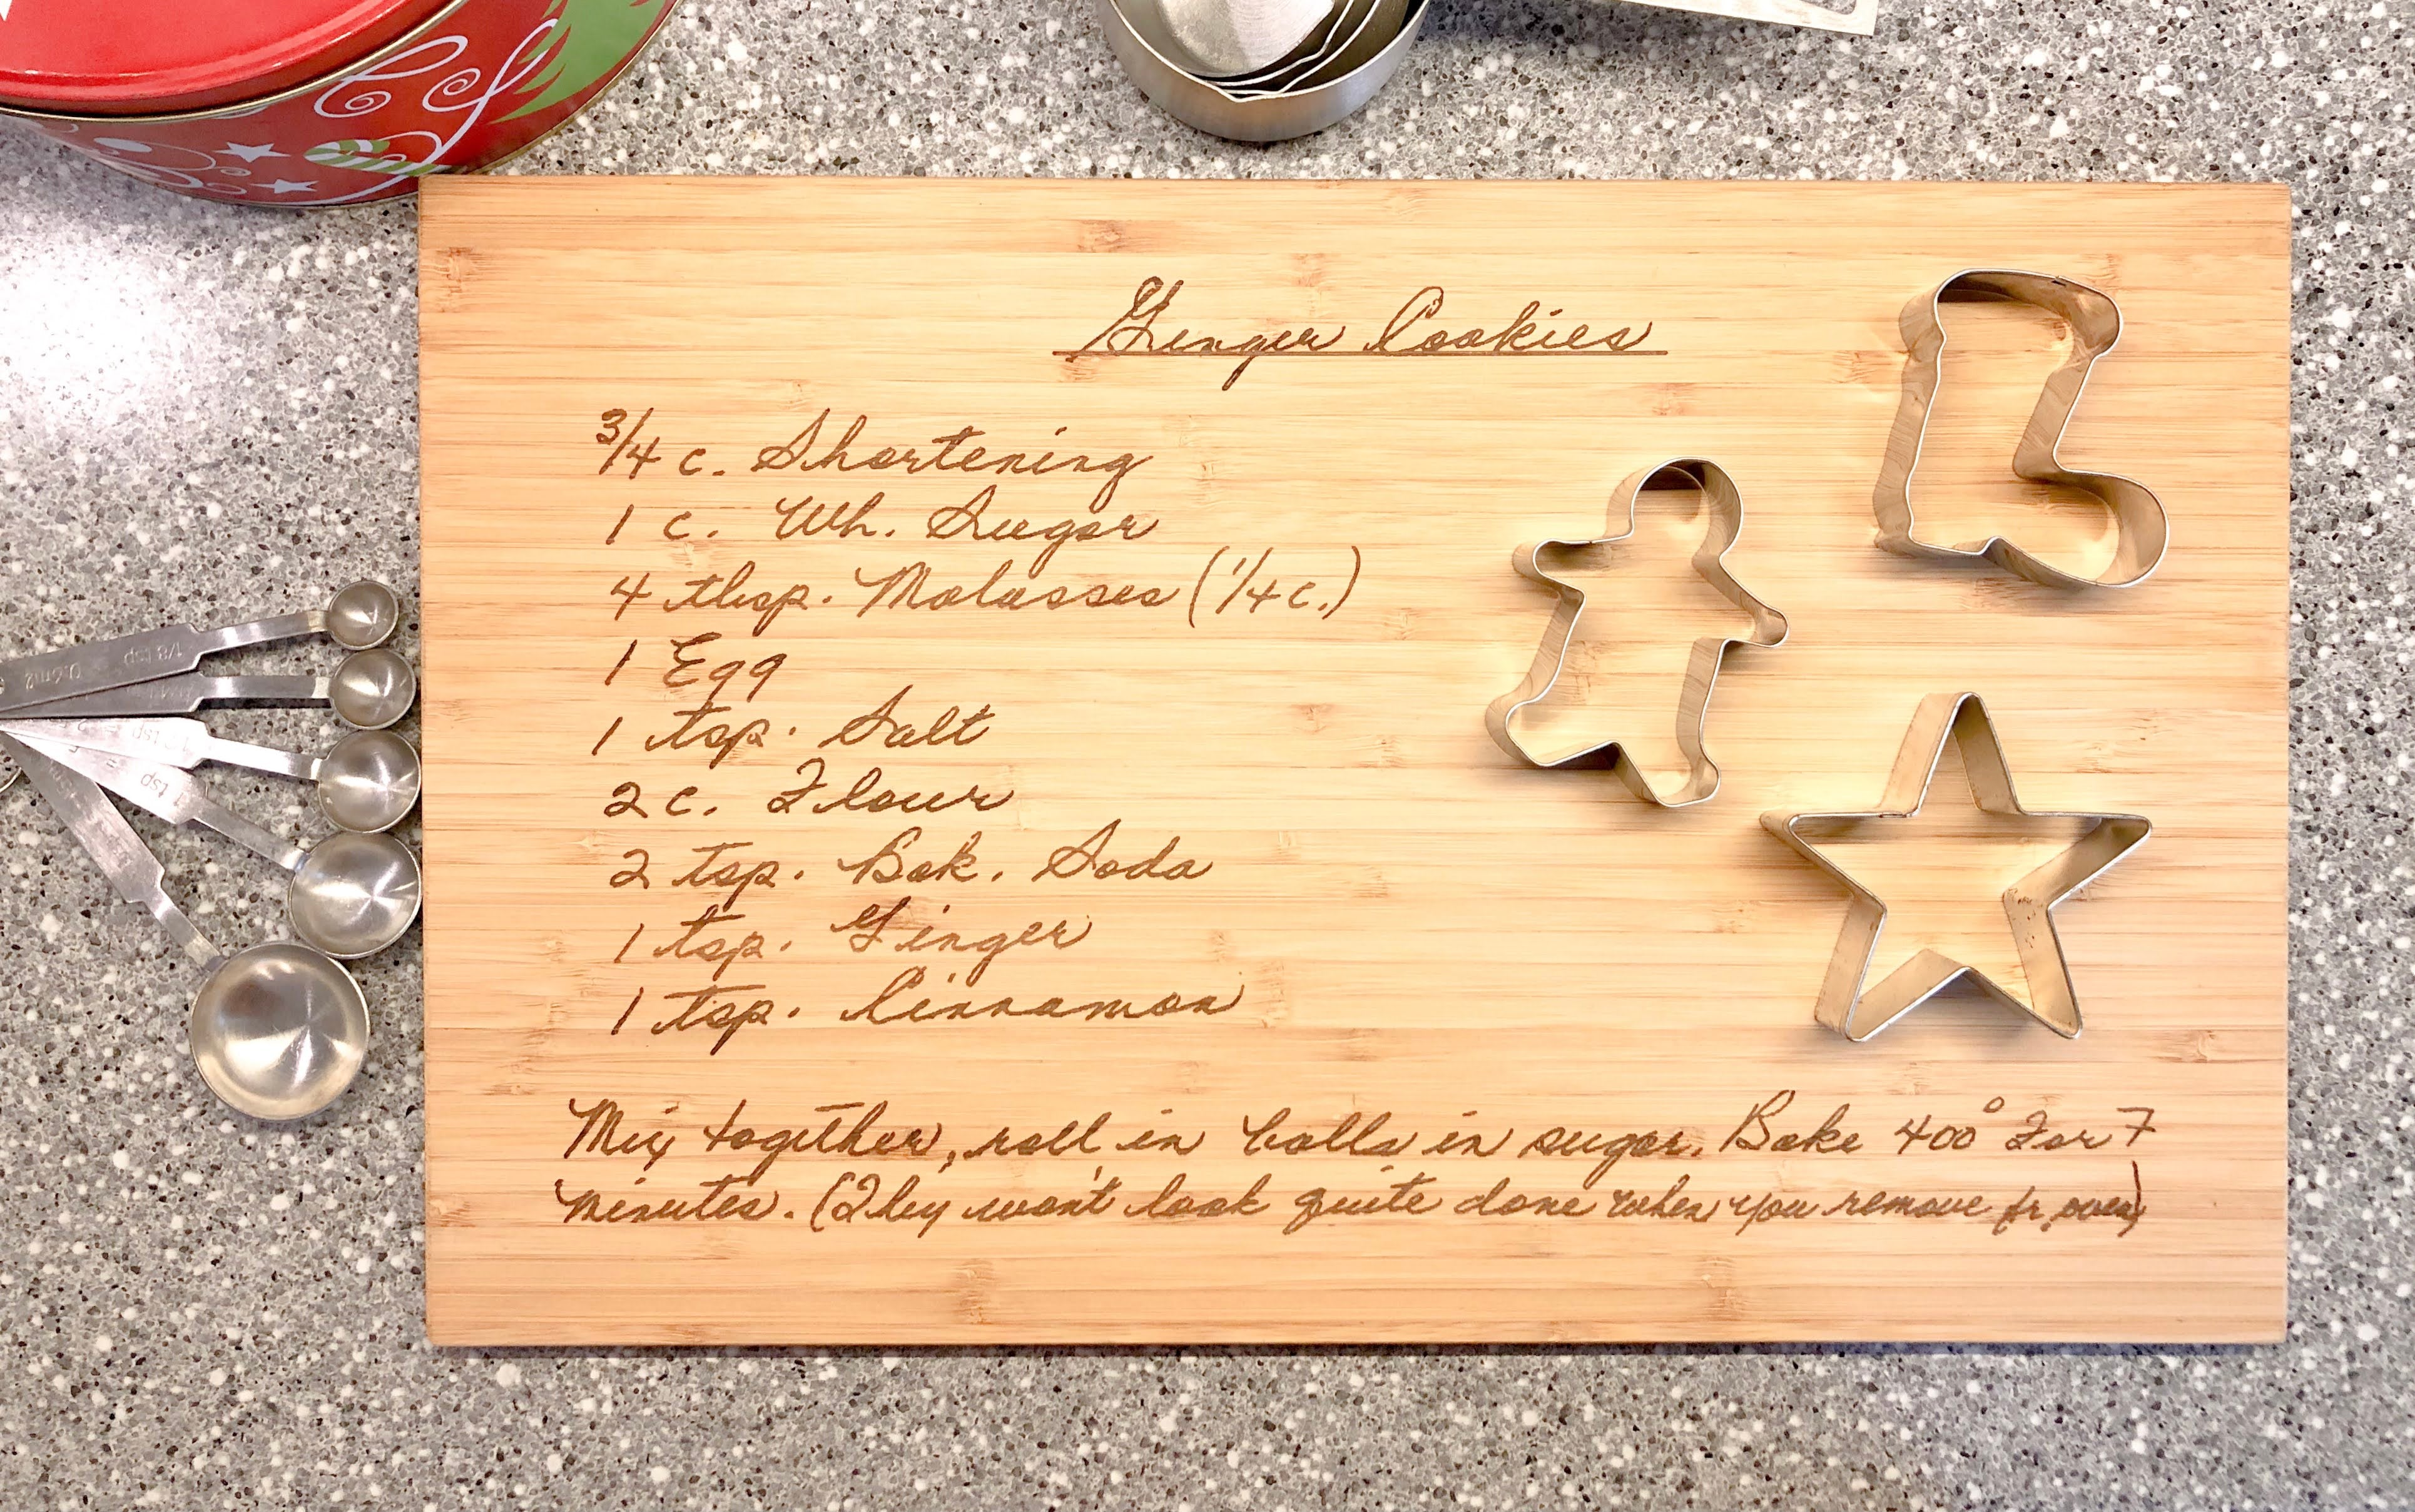 Handwritten recipes on cutting boards